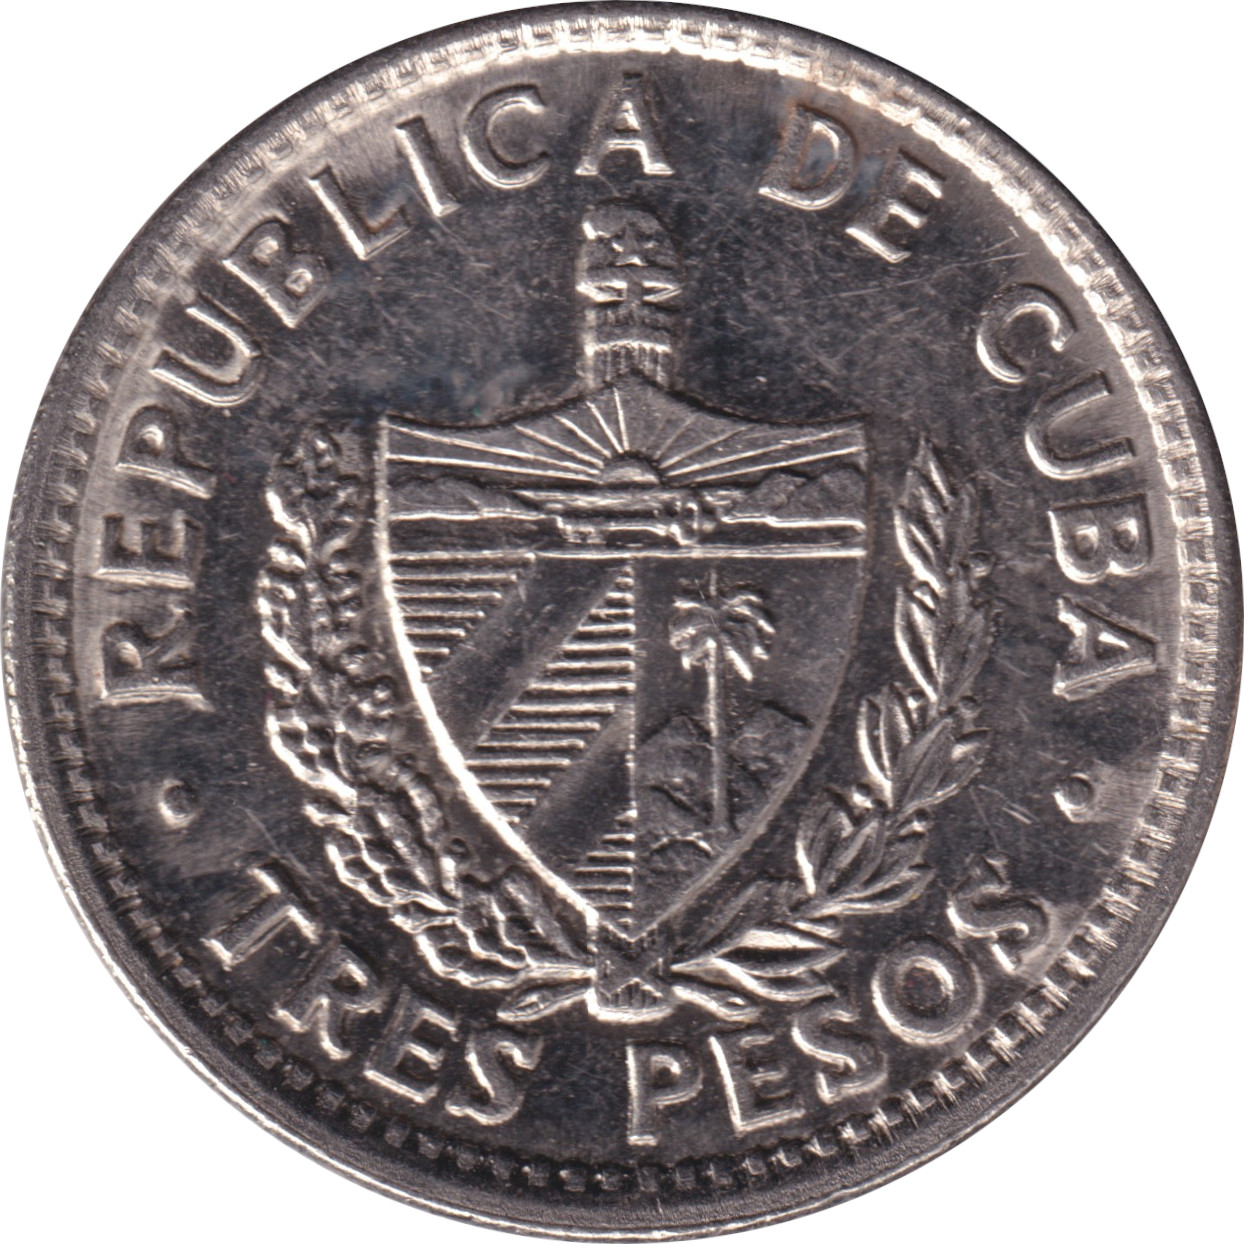 3 pesos - Che Guevara